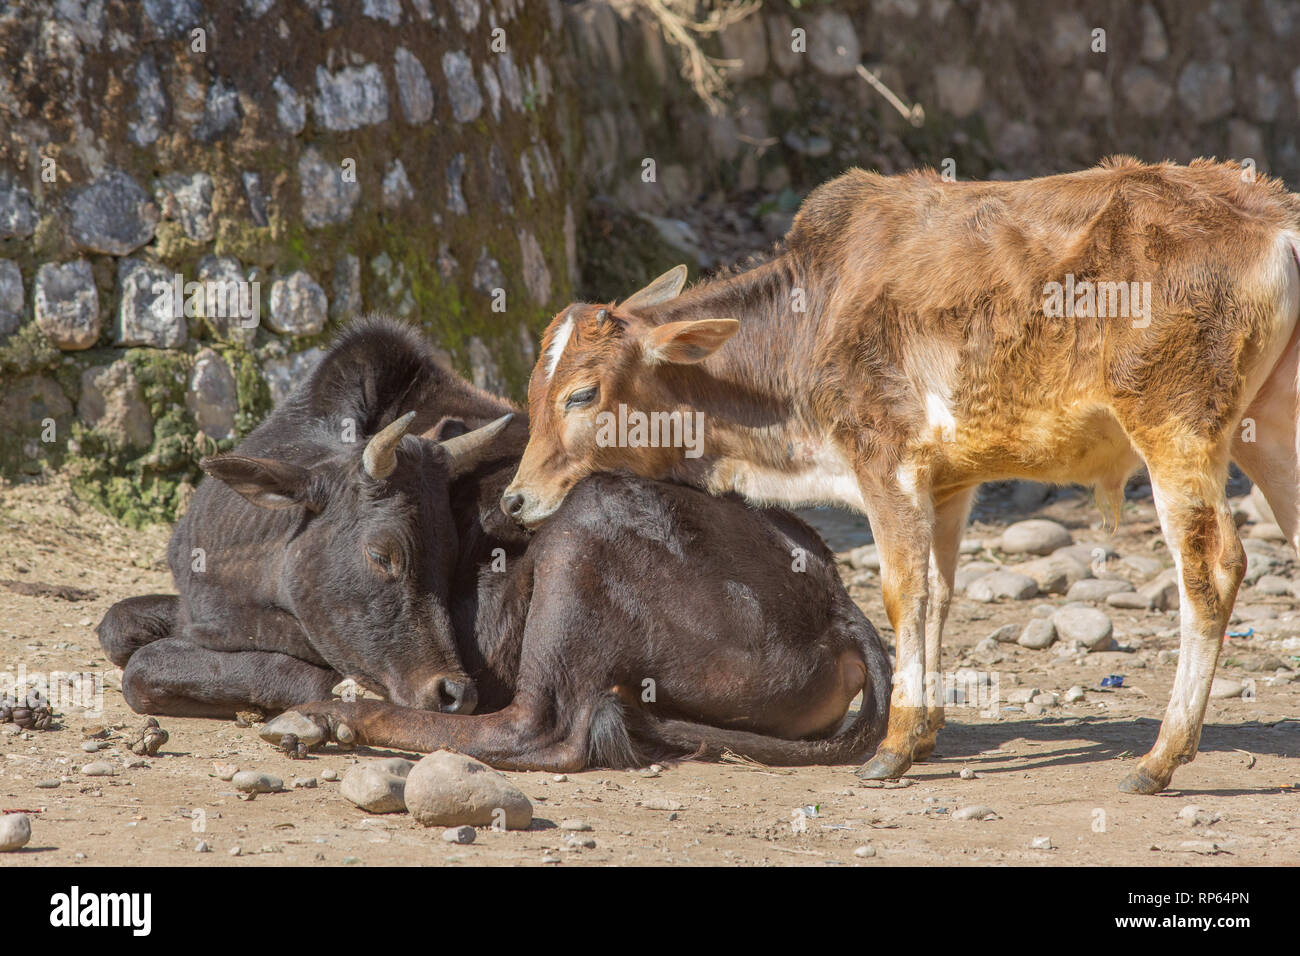 Zebu Cattle (Bos indicus), two bullocks, seeking none confrontational attention, meeting. Behaviour. Ethology Stock Photo